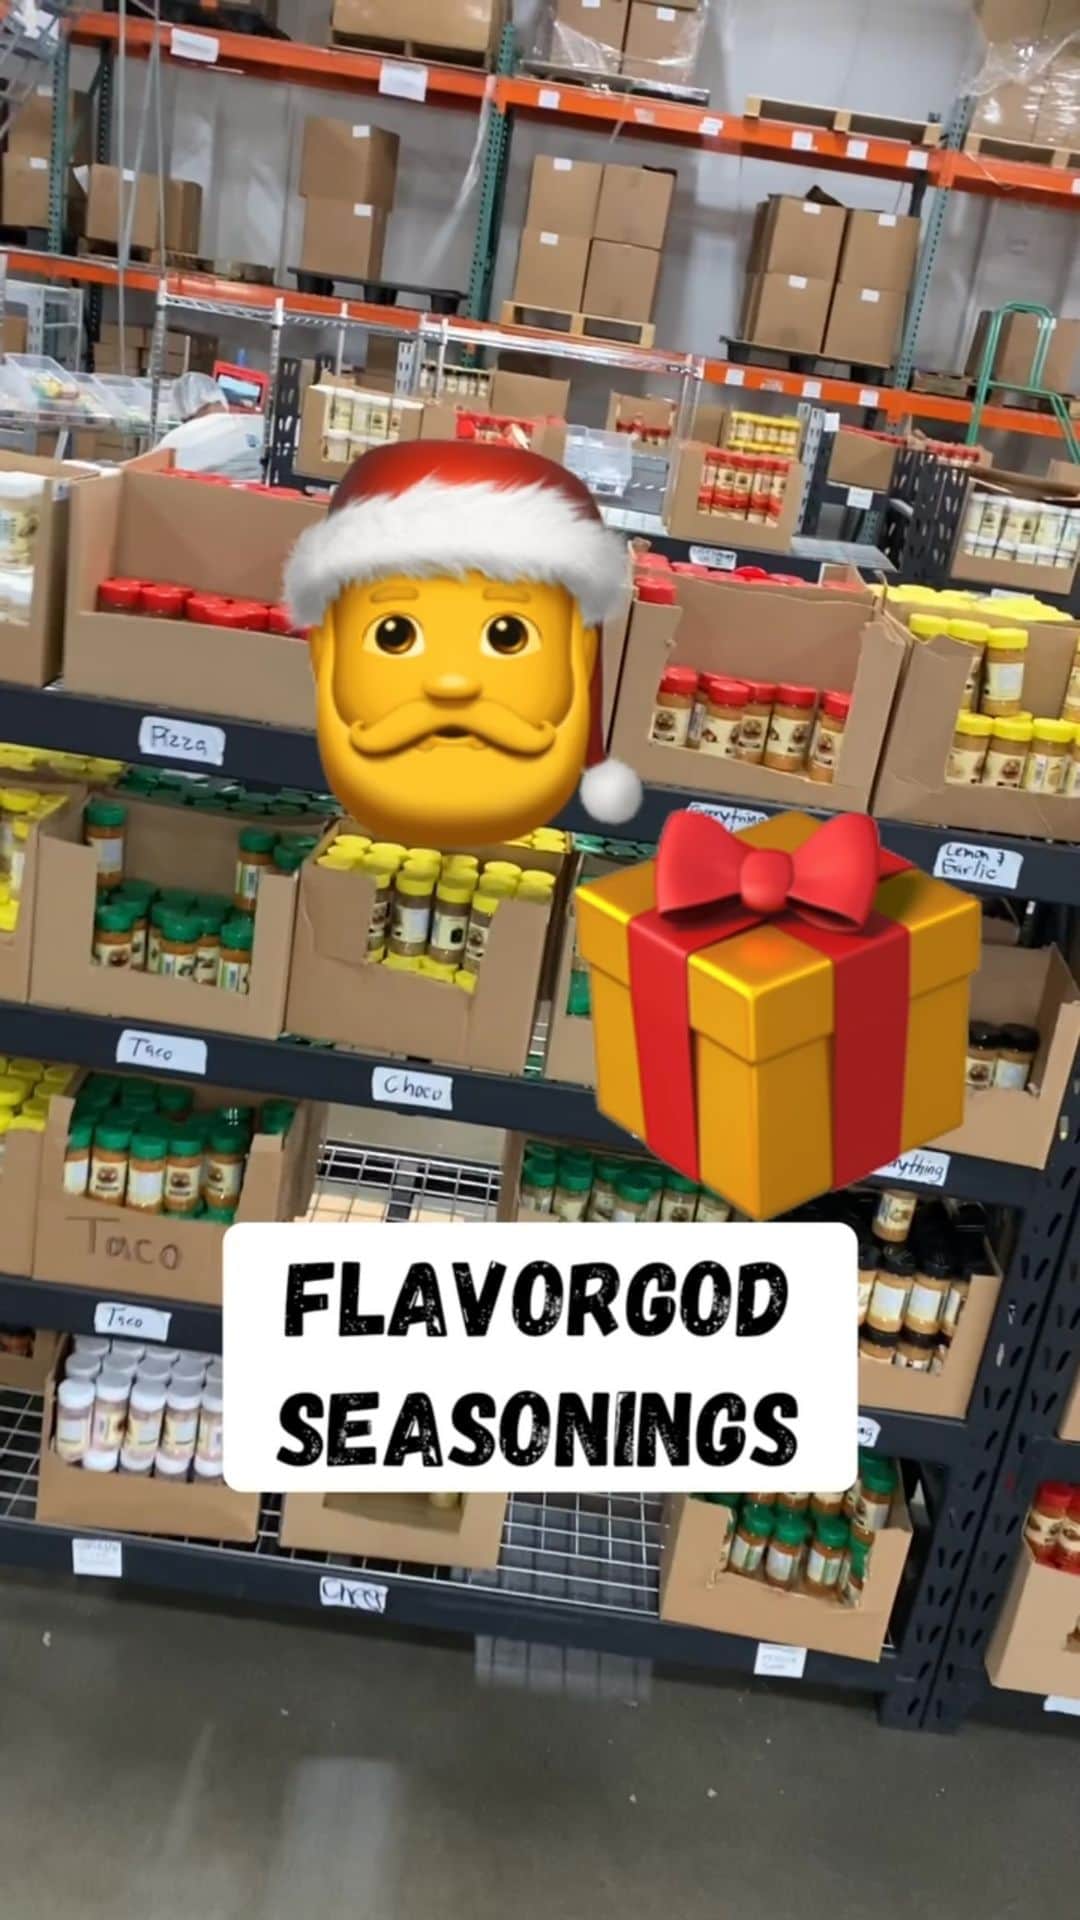 Flavorgod Seasoningsのインスタグラム